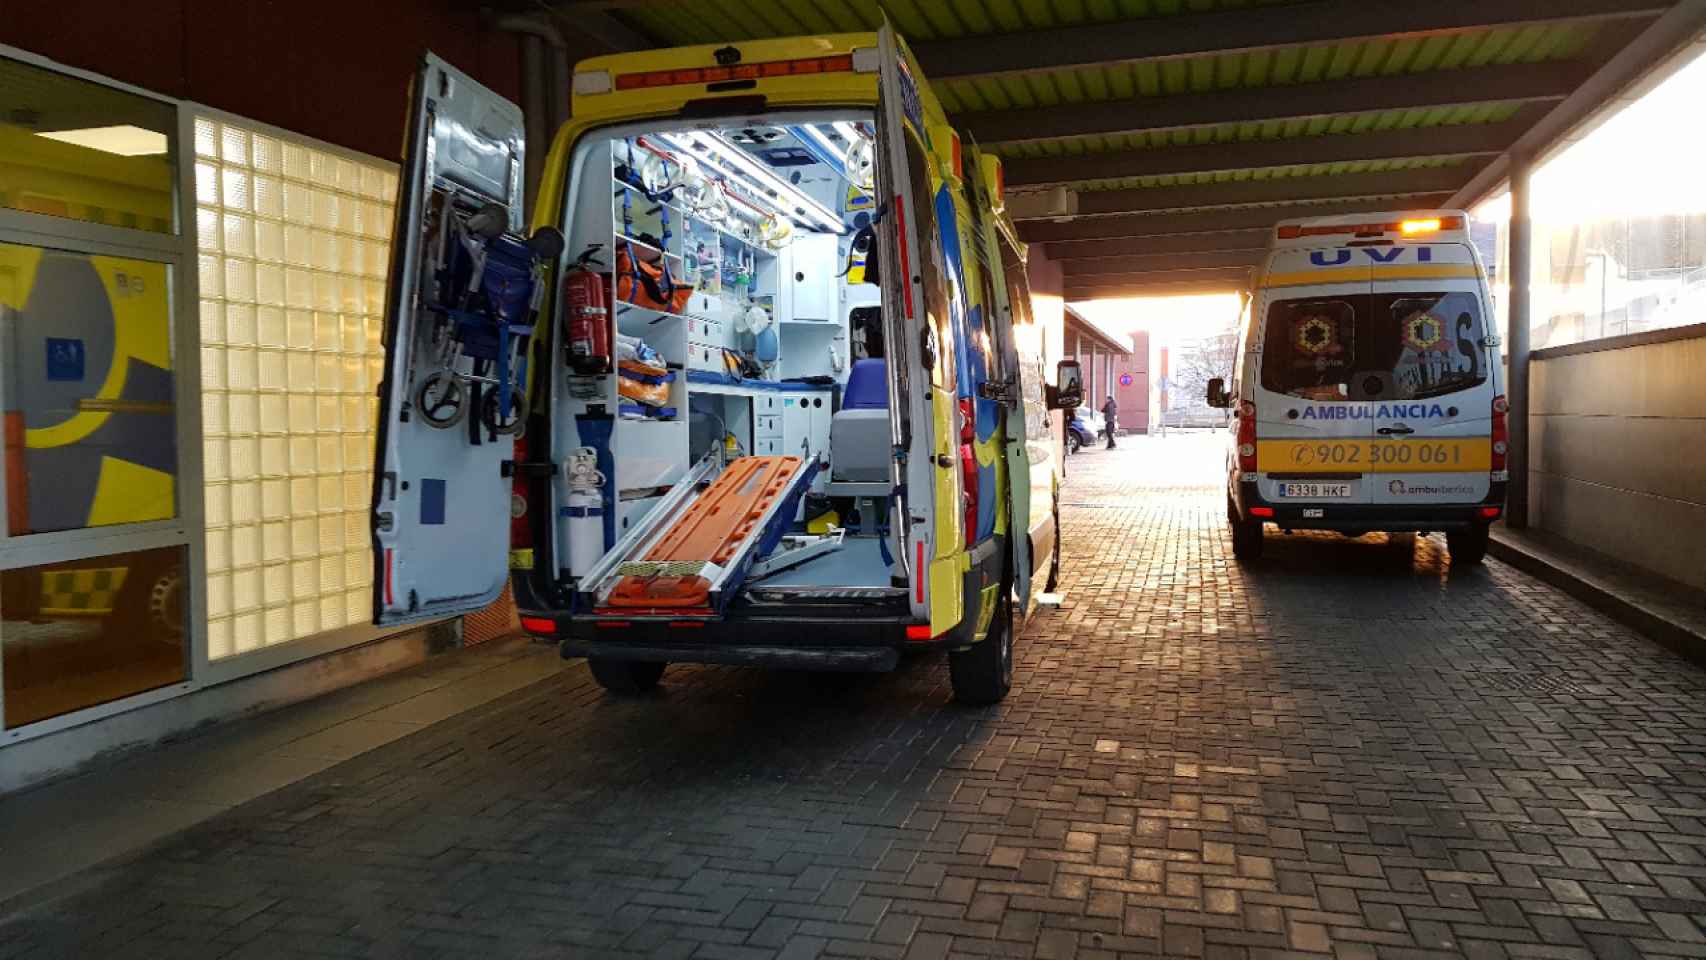 Urgencias Zamora ambulancia.jpg